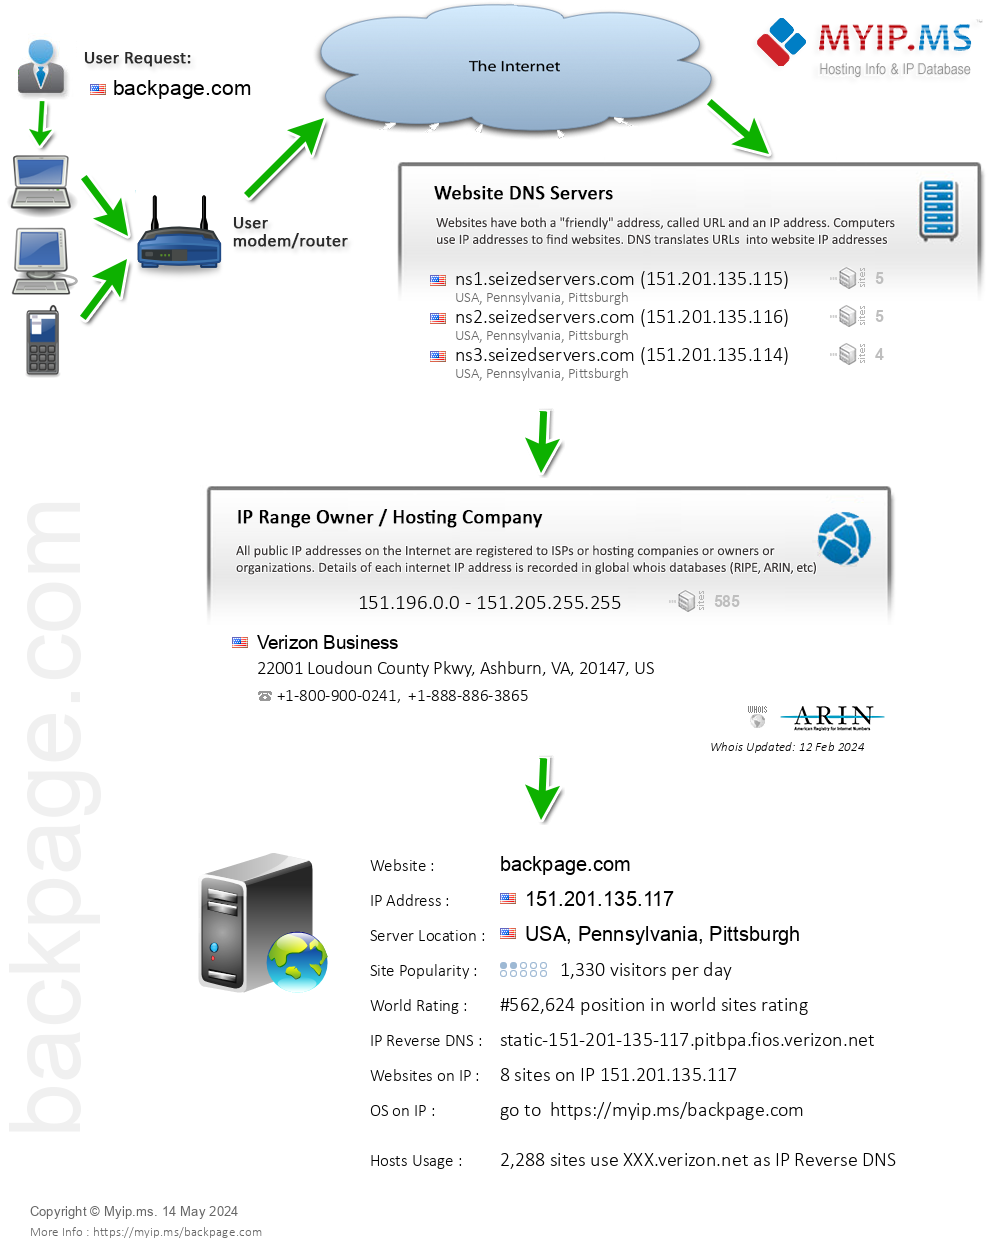 Backpage.com - Website Hosting Visual IP Diagram